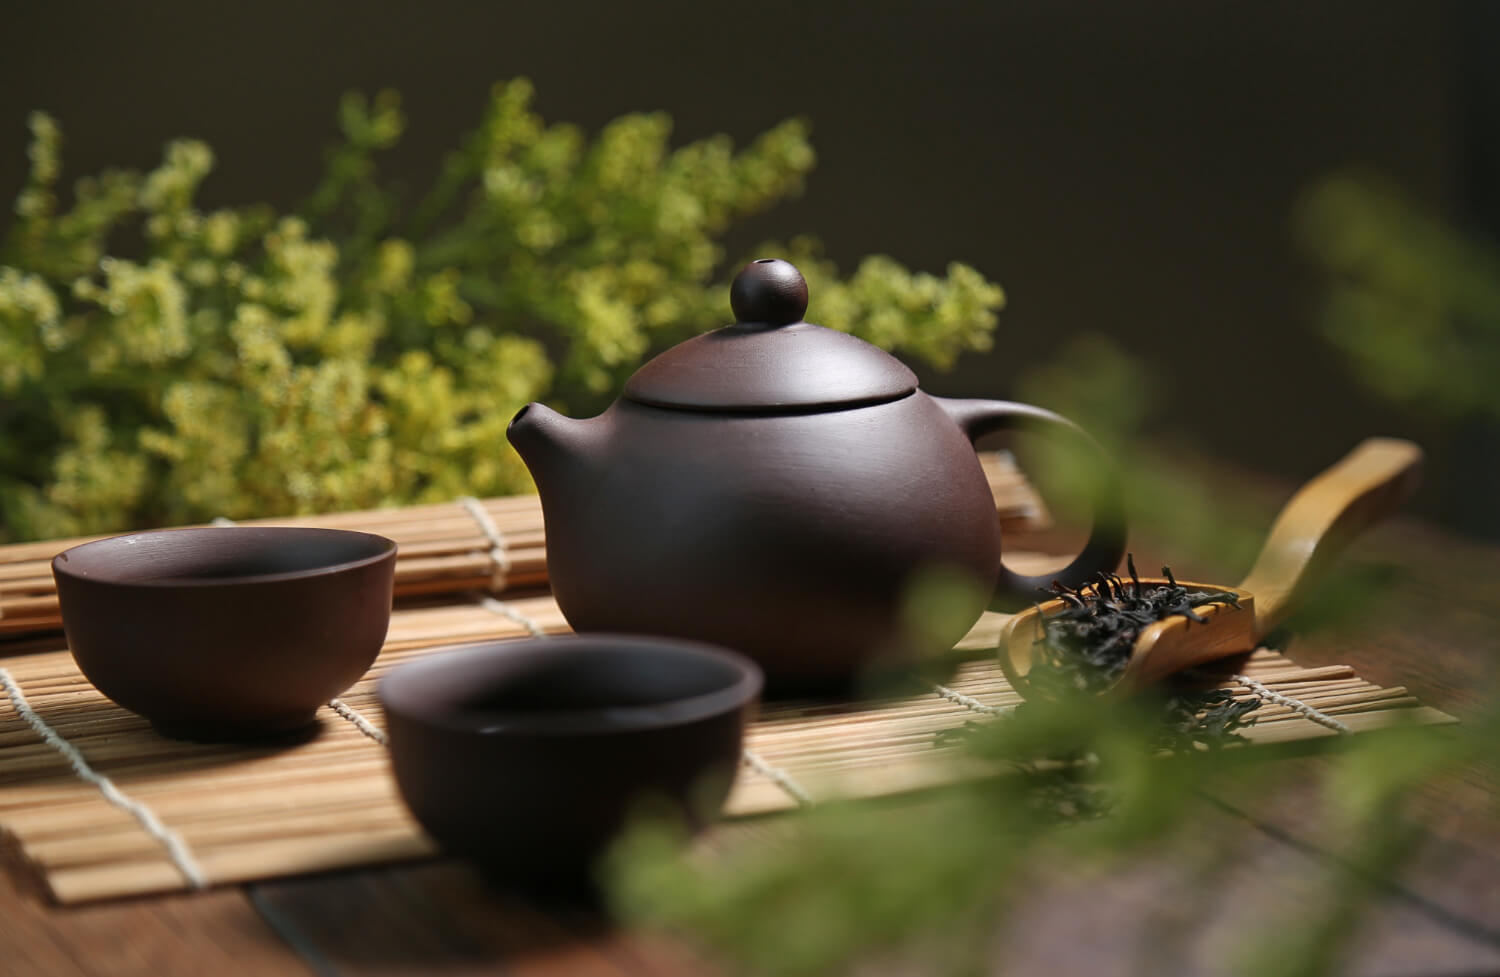 Five o'clock tea history and 29 curiosities about tea